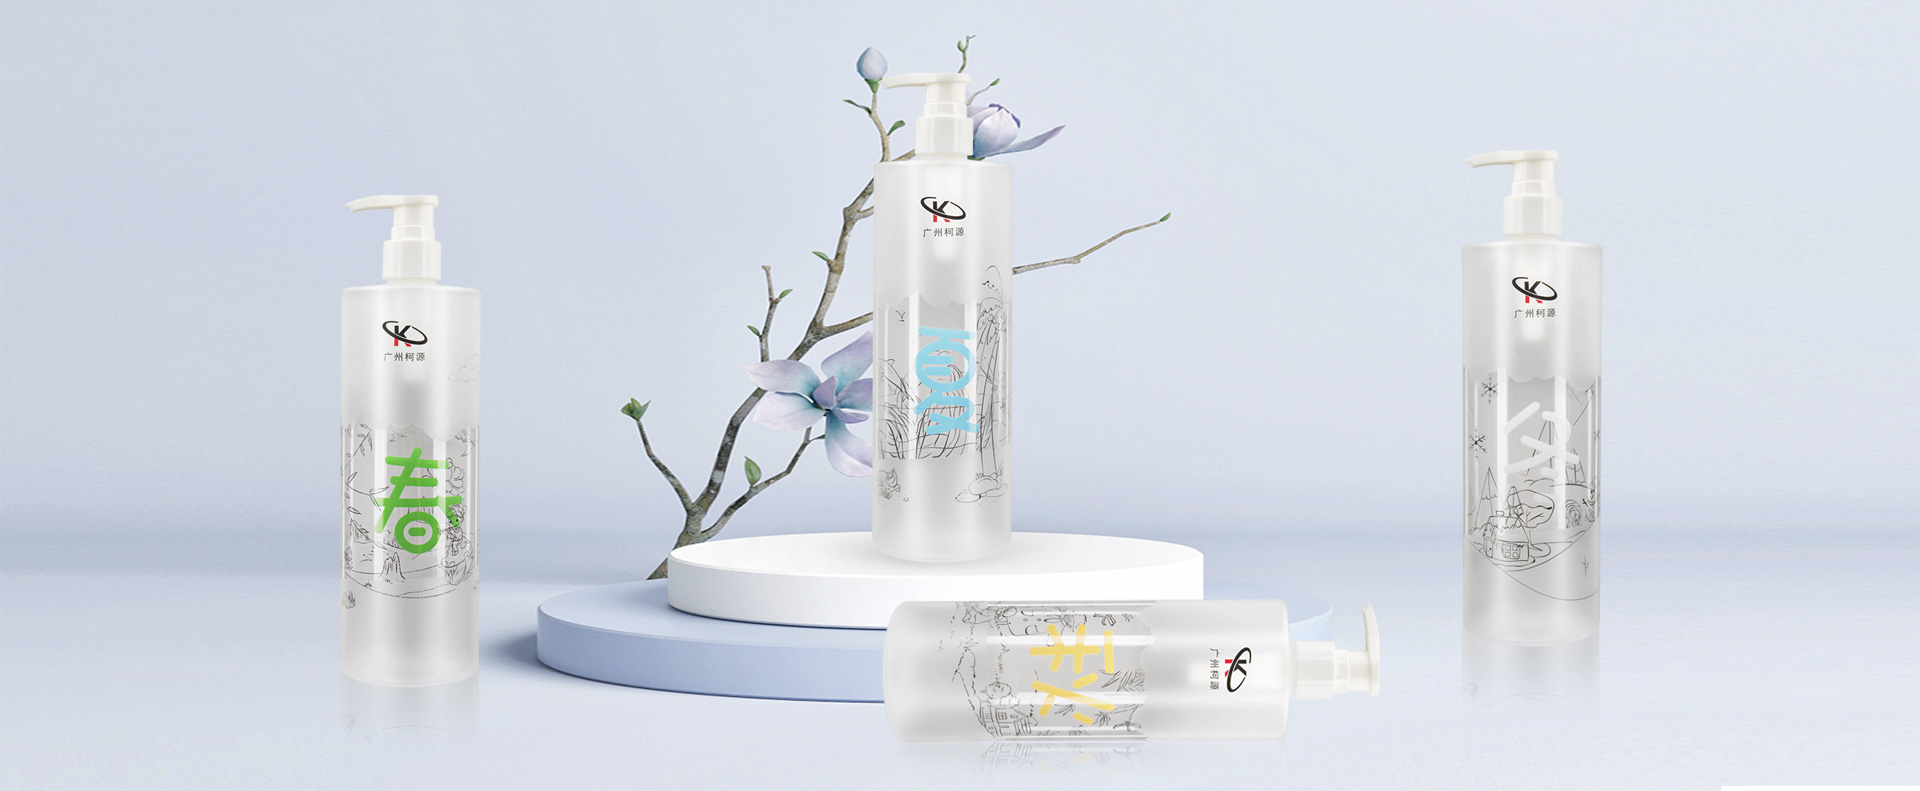 KY061 Four Seasons Shampoo Conditioner Shower Gel 500ml PET Plastic Bottles Special Matte Finishing